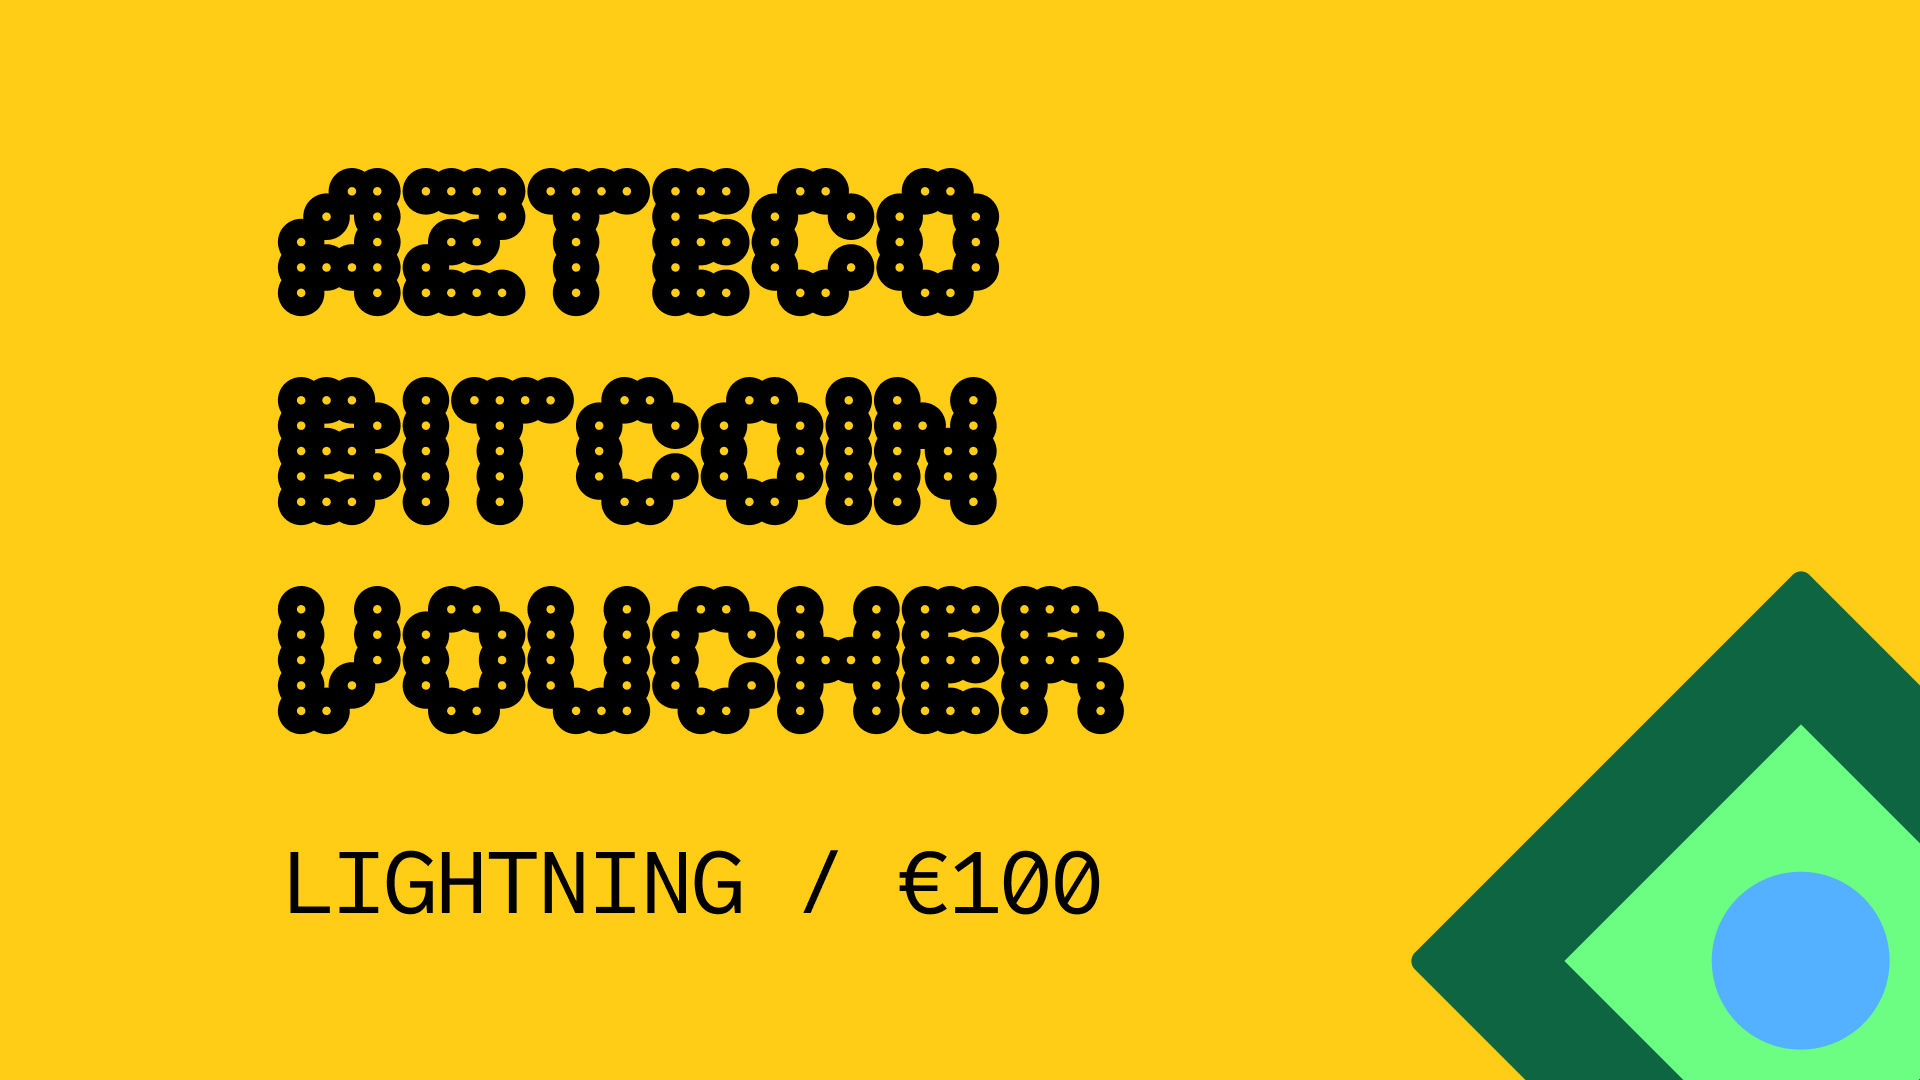 Azteco Bitcoin Lighting €100 Voucher (112.98$)